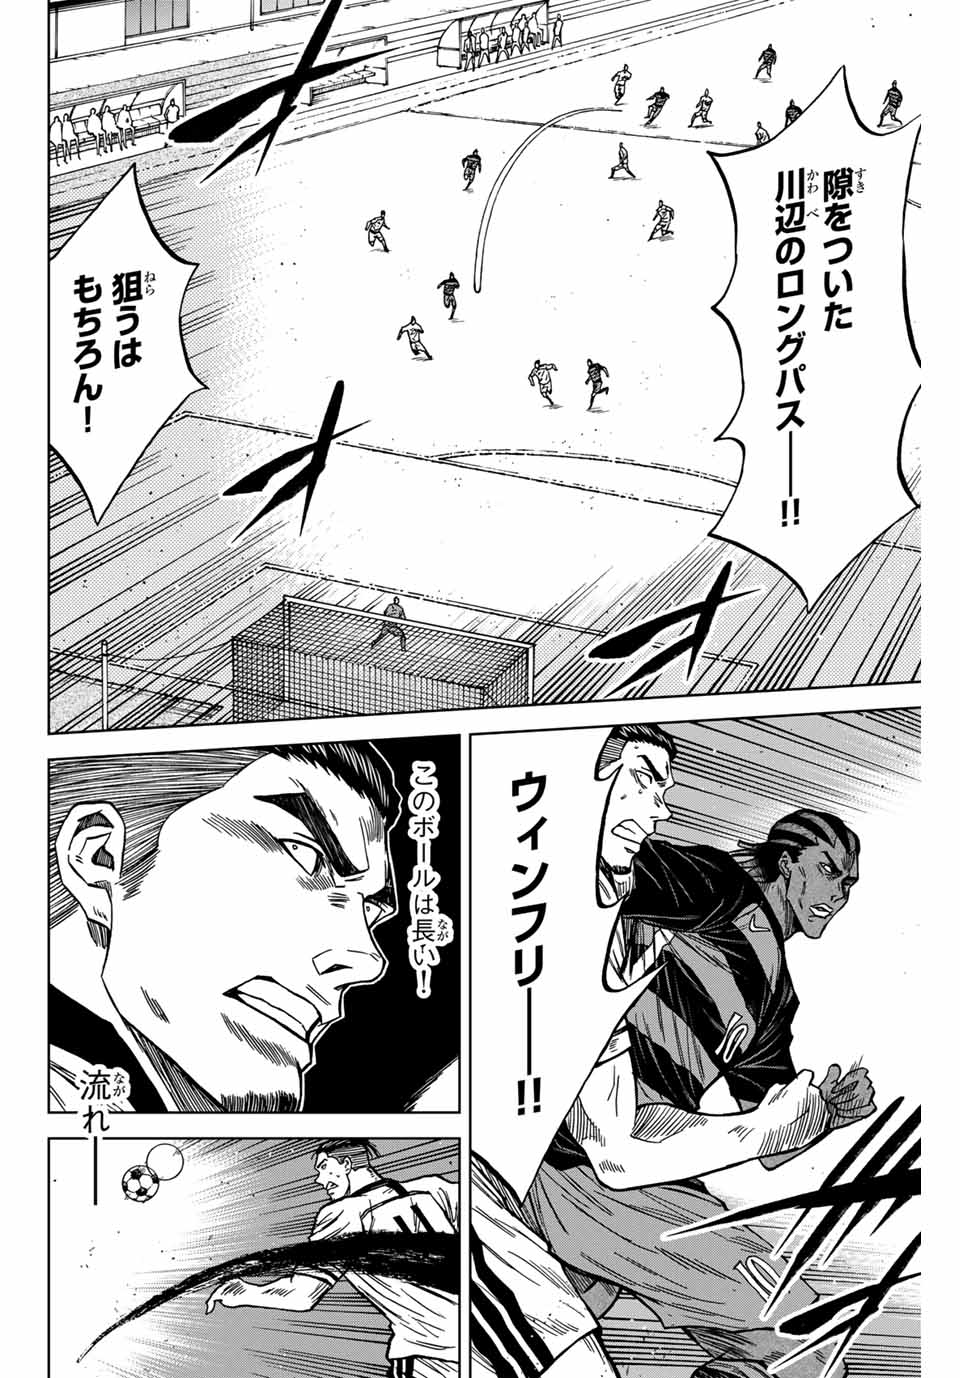 Aoku Somero - Chapter 122 - Page 12